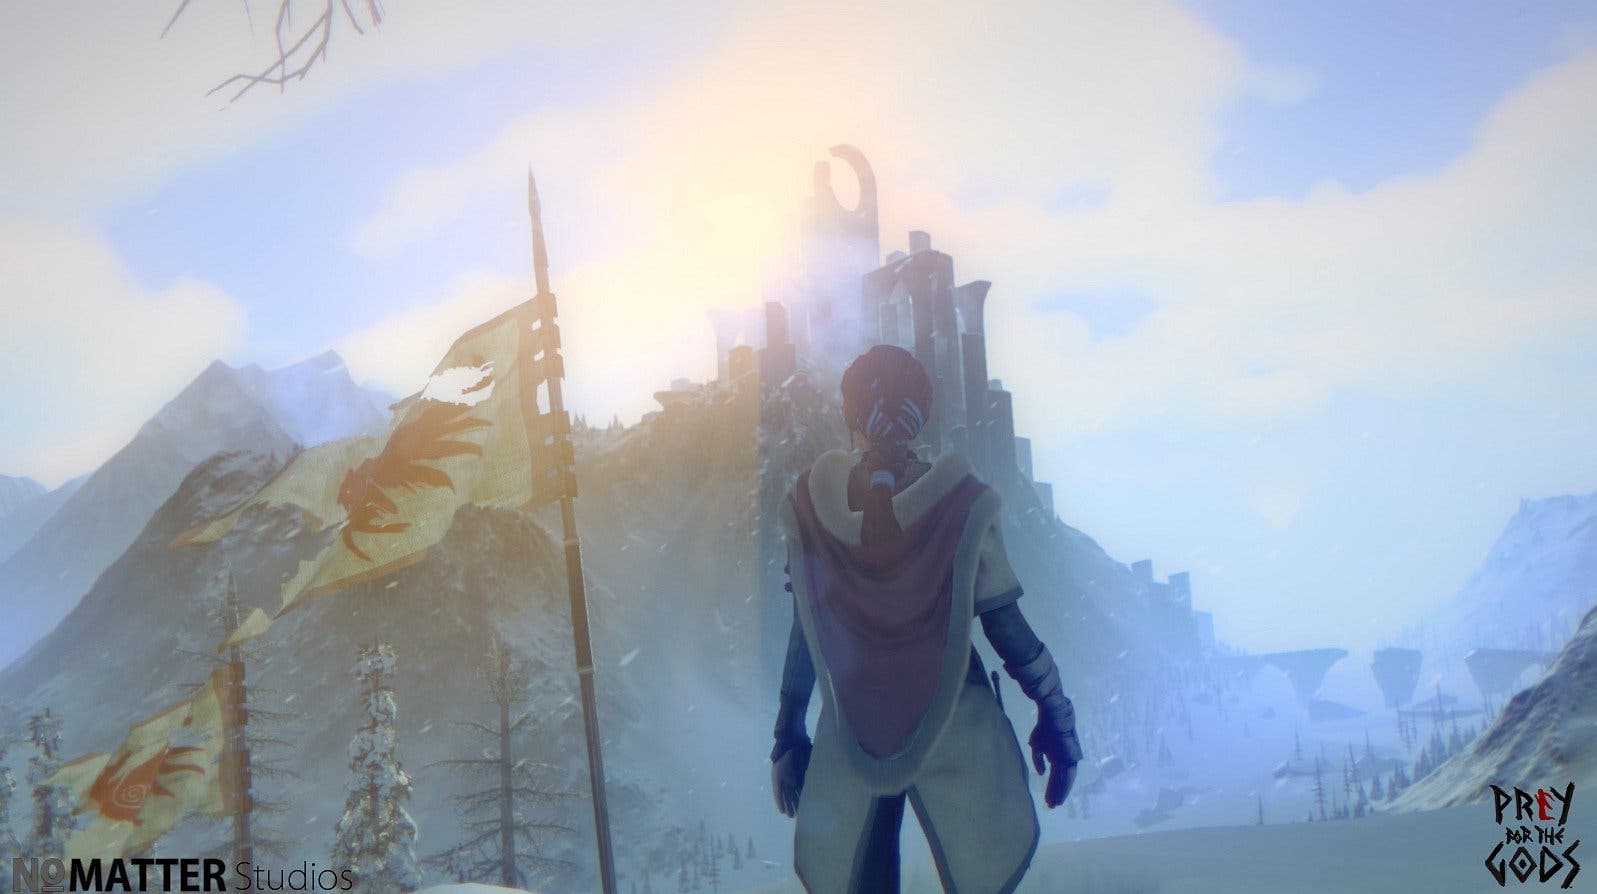 Imagen de La solitaria aventura Praey for the Gods vuelve a aparecer dejándonos un nuevo gameplay